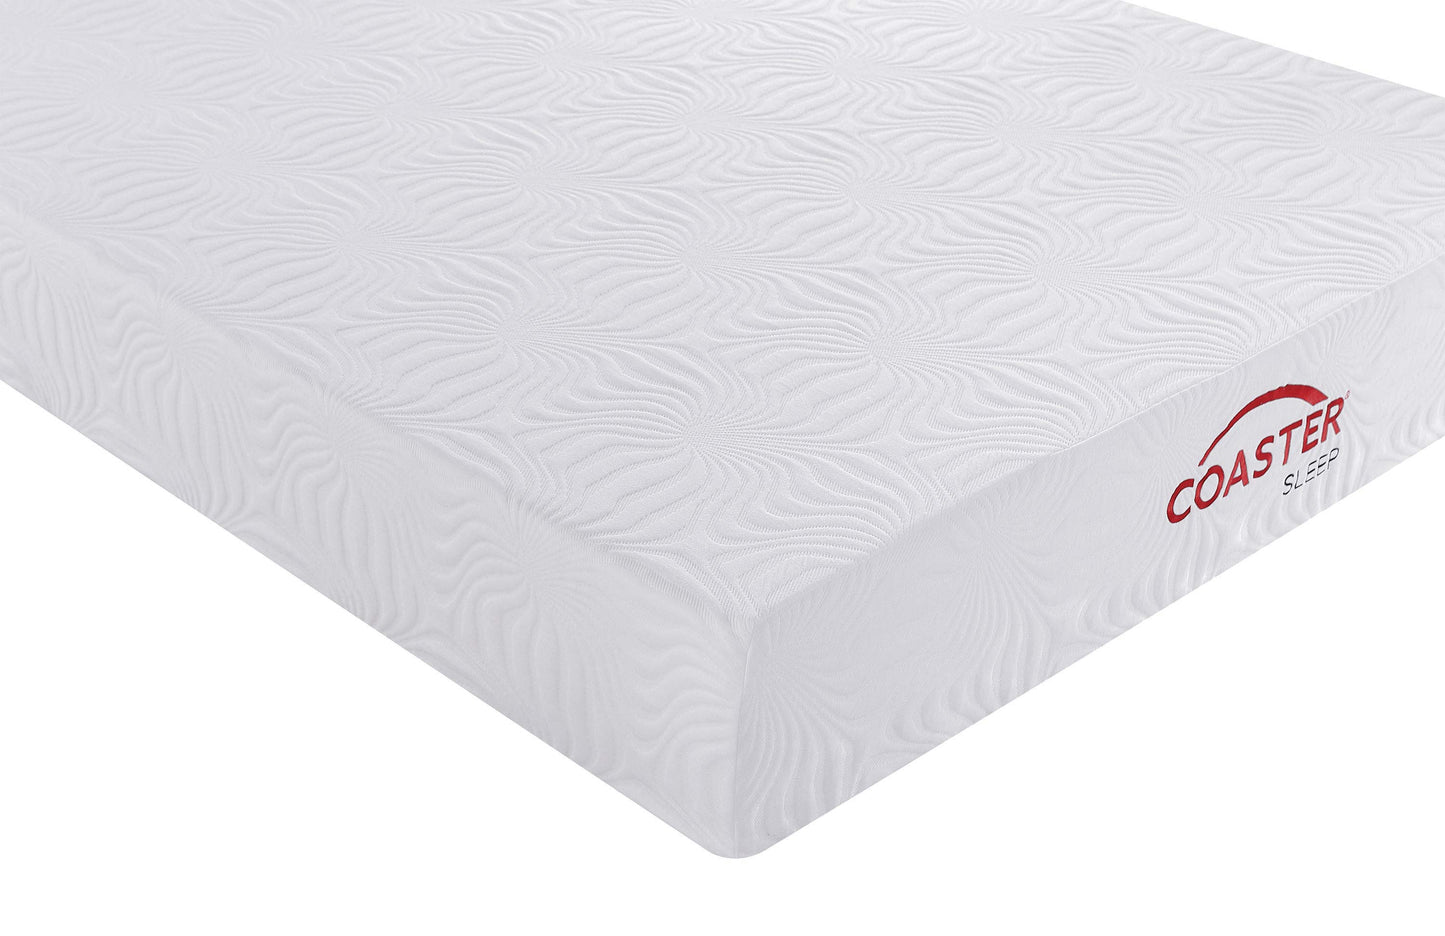 10" full memory foam mattress